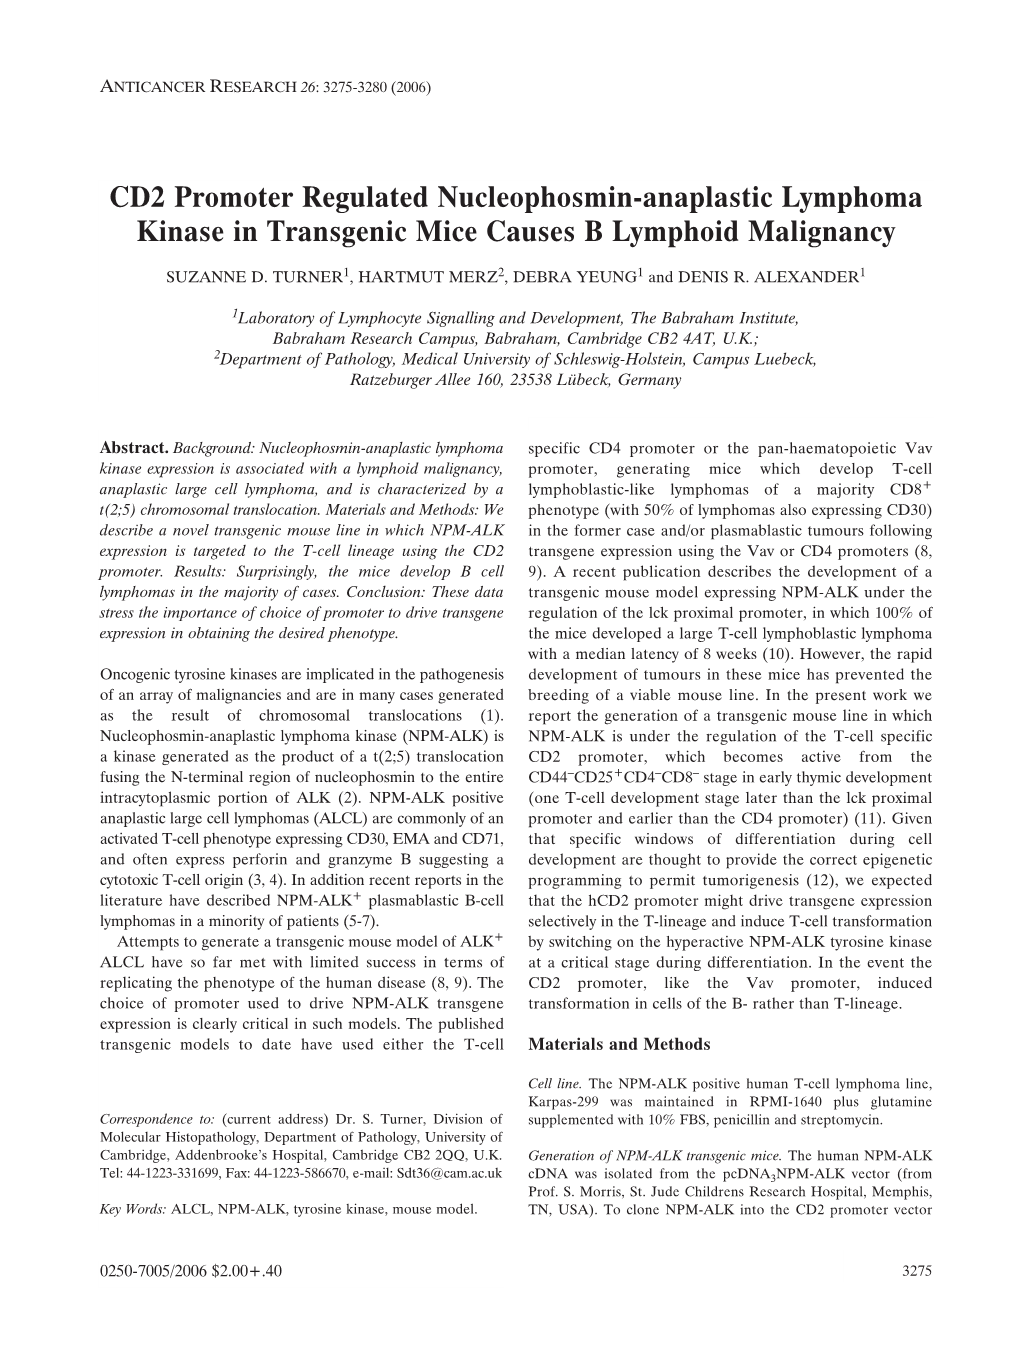 CD2 Promoter Regulated Nucleophosmin-Anaplastic Lymphoma Kinase in Transgenic Mice Causes B Lymphoid Malignancy